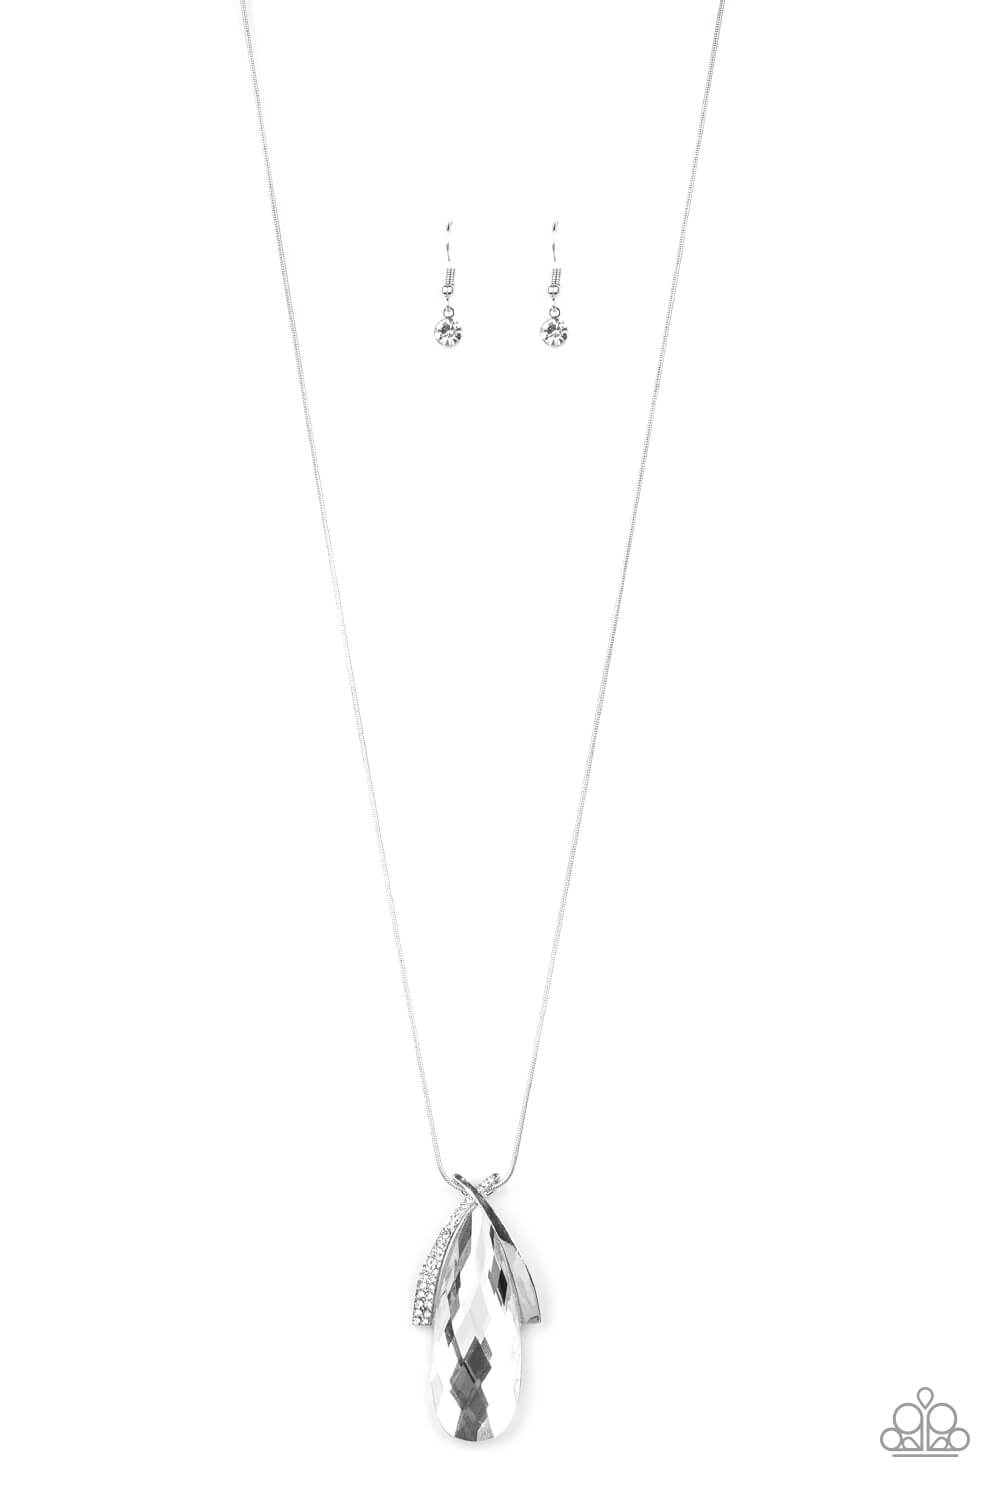 Stellar Sophistication Silver Necklace Set - Princess Glam Shop